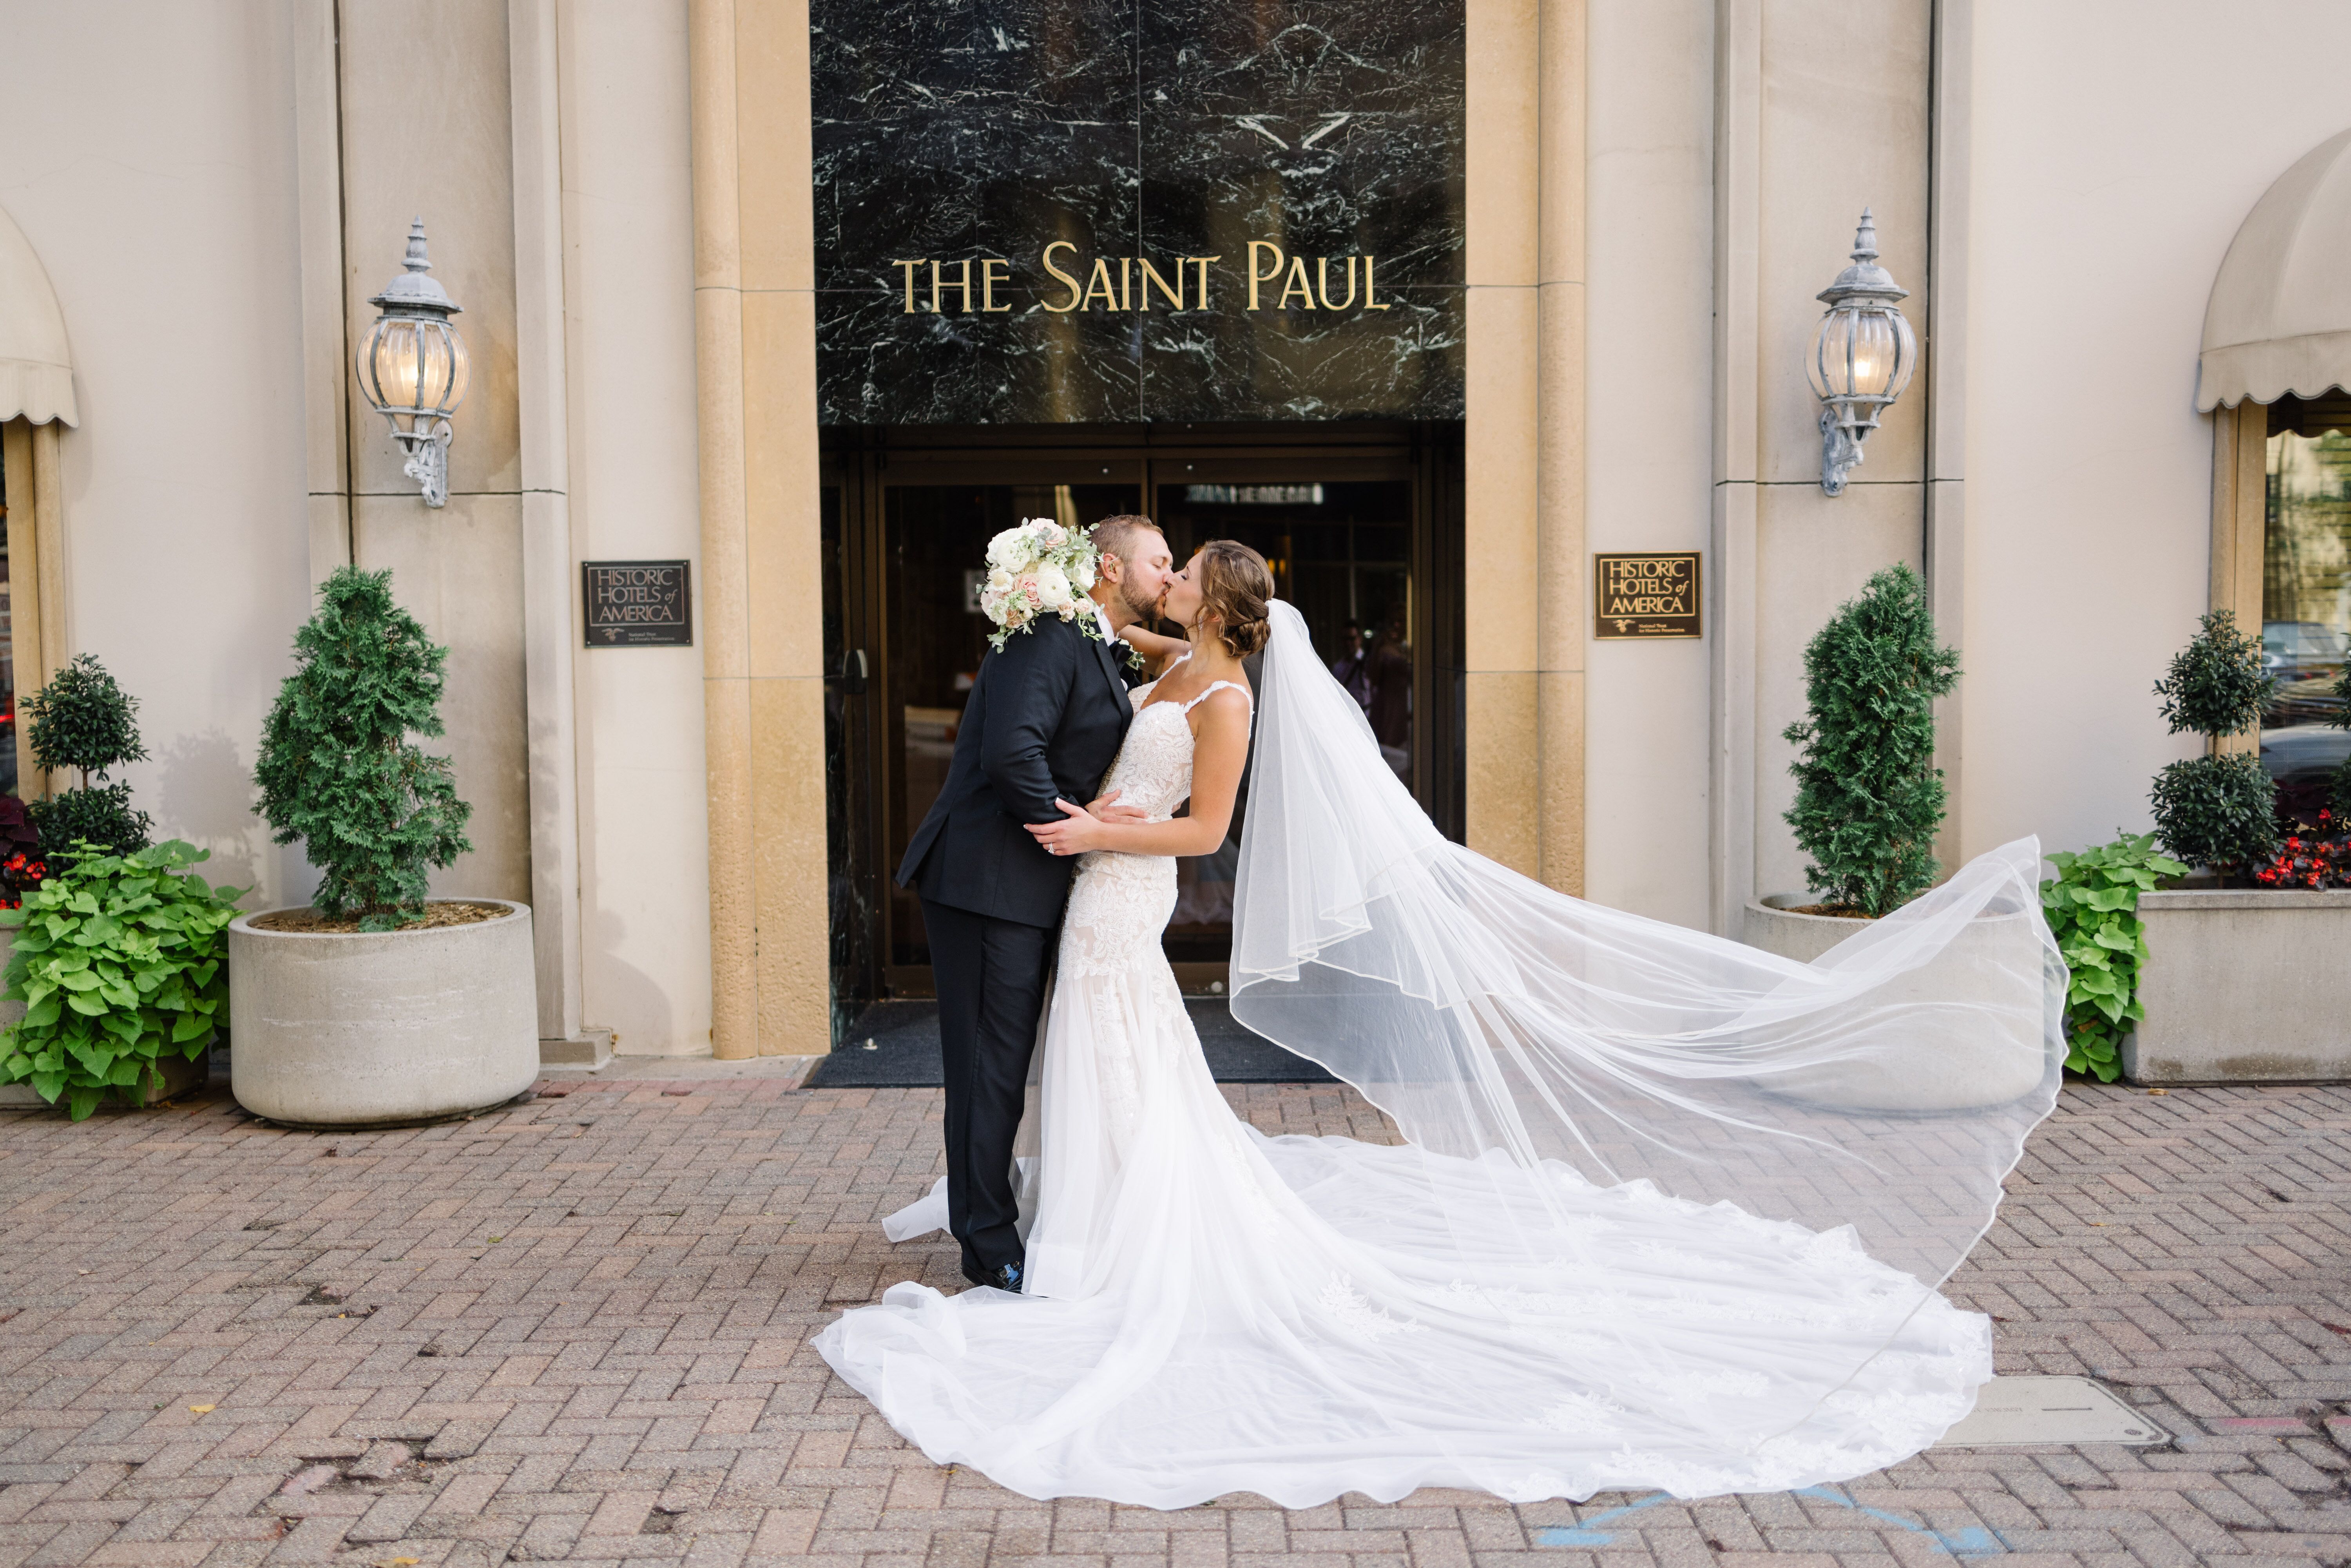 The Saint Paul Hotel  Reception Venues - The Knot